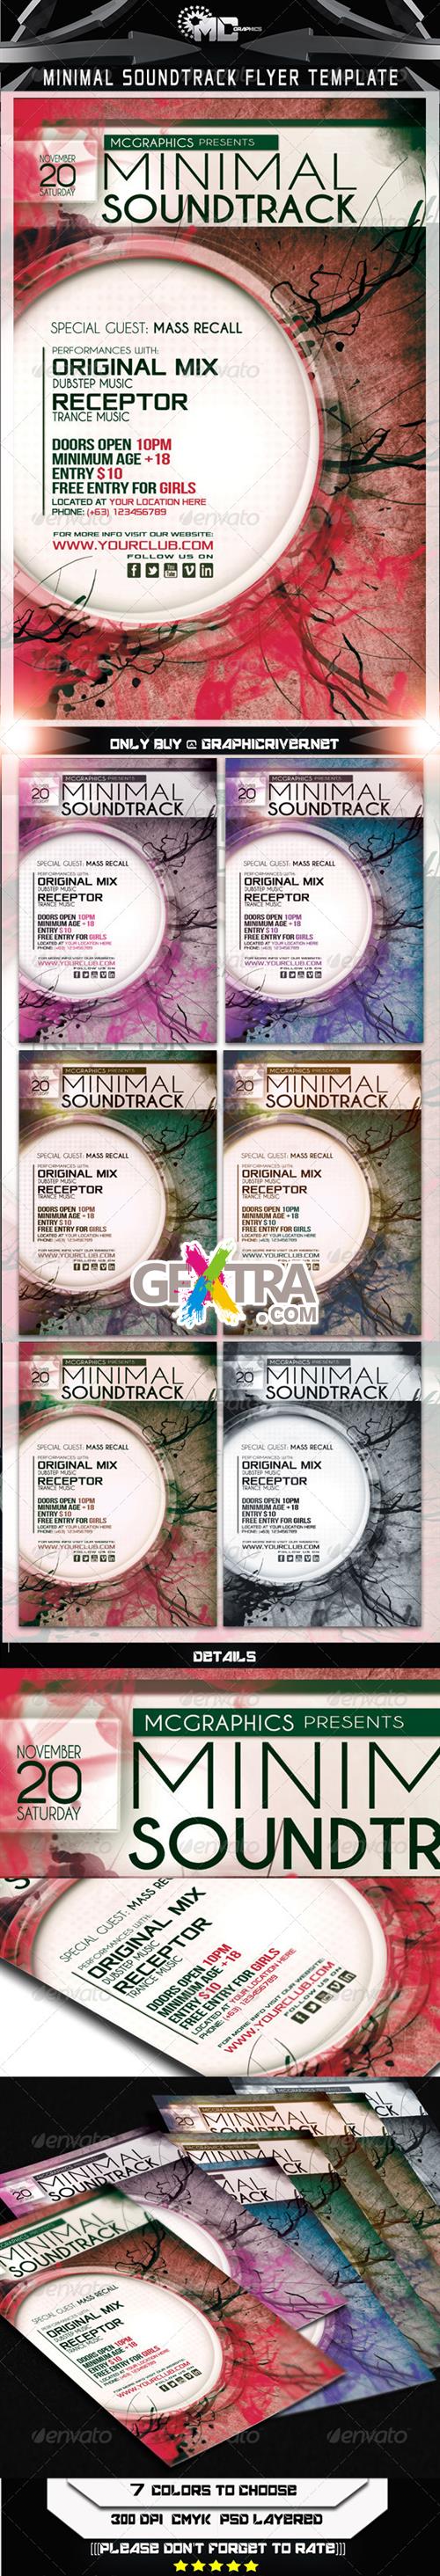 GraphicRiver - Minimal Soundtrack Flyer Template